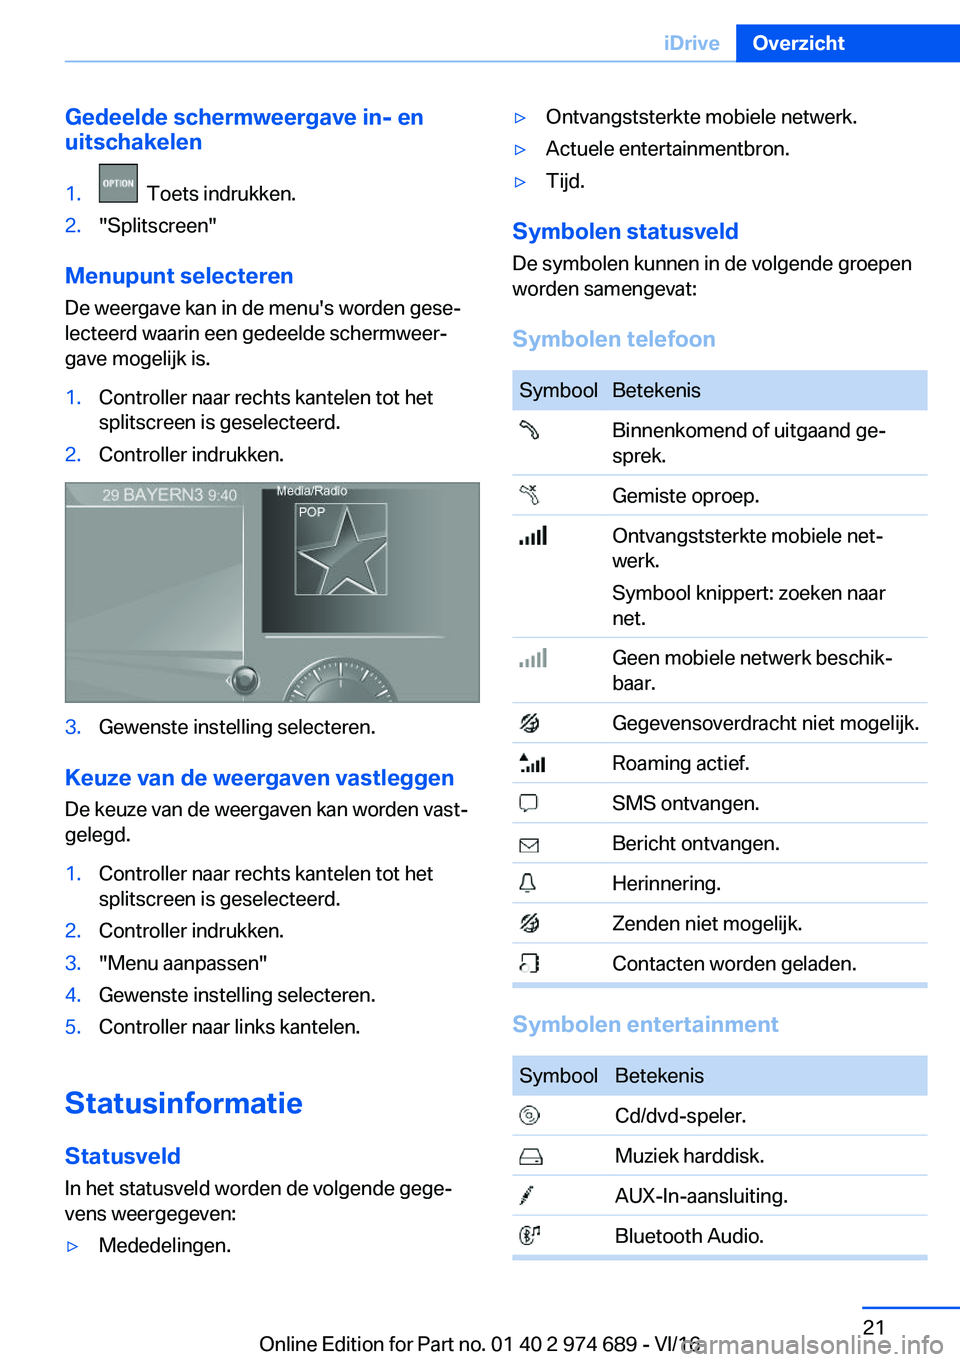 BMW M2 2017  Instructieboekjes (in Dutch) �G�e�d�e�e�l�d�e��s�c�h�e�r�m�w�e�e�r�g�a�v�e��i�n�-��e�n
�u�i�t�s�c�h�a�k�e�l�e�n�1�.� � �T�o�e�t�s� �i�n�d�r�u�k�k�e�n�.�2�.�"�S�p�l�i�t�s�c�r�e�e�n�"
�M�e�n�u�p�u�n�t��s�e�l�e�c�t�e�r�e